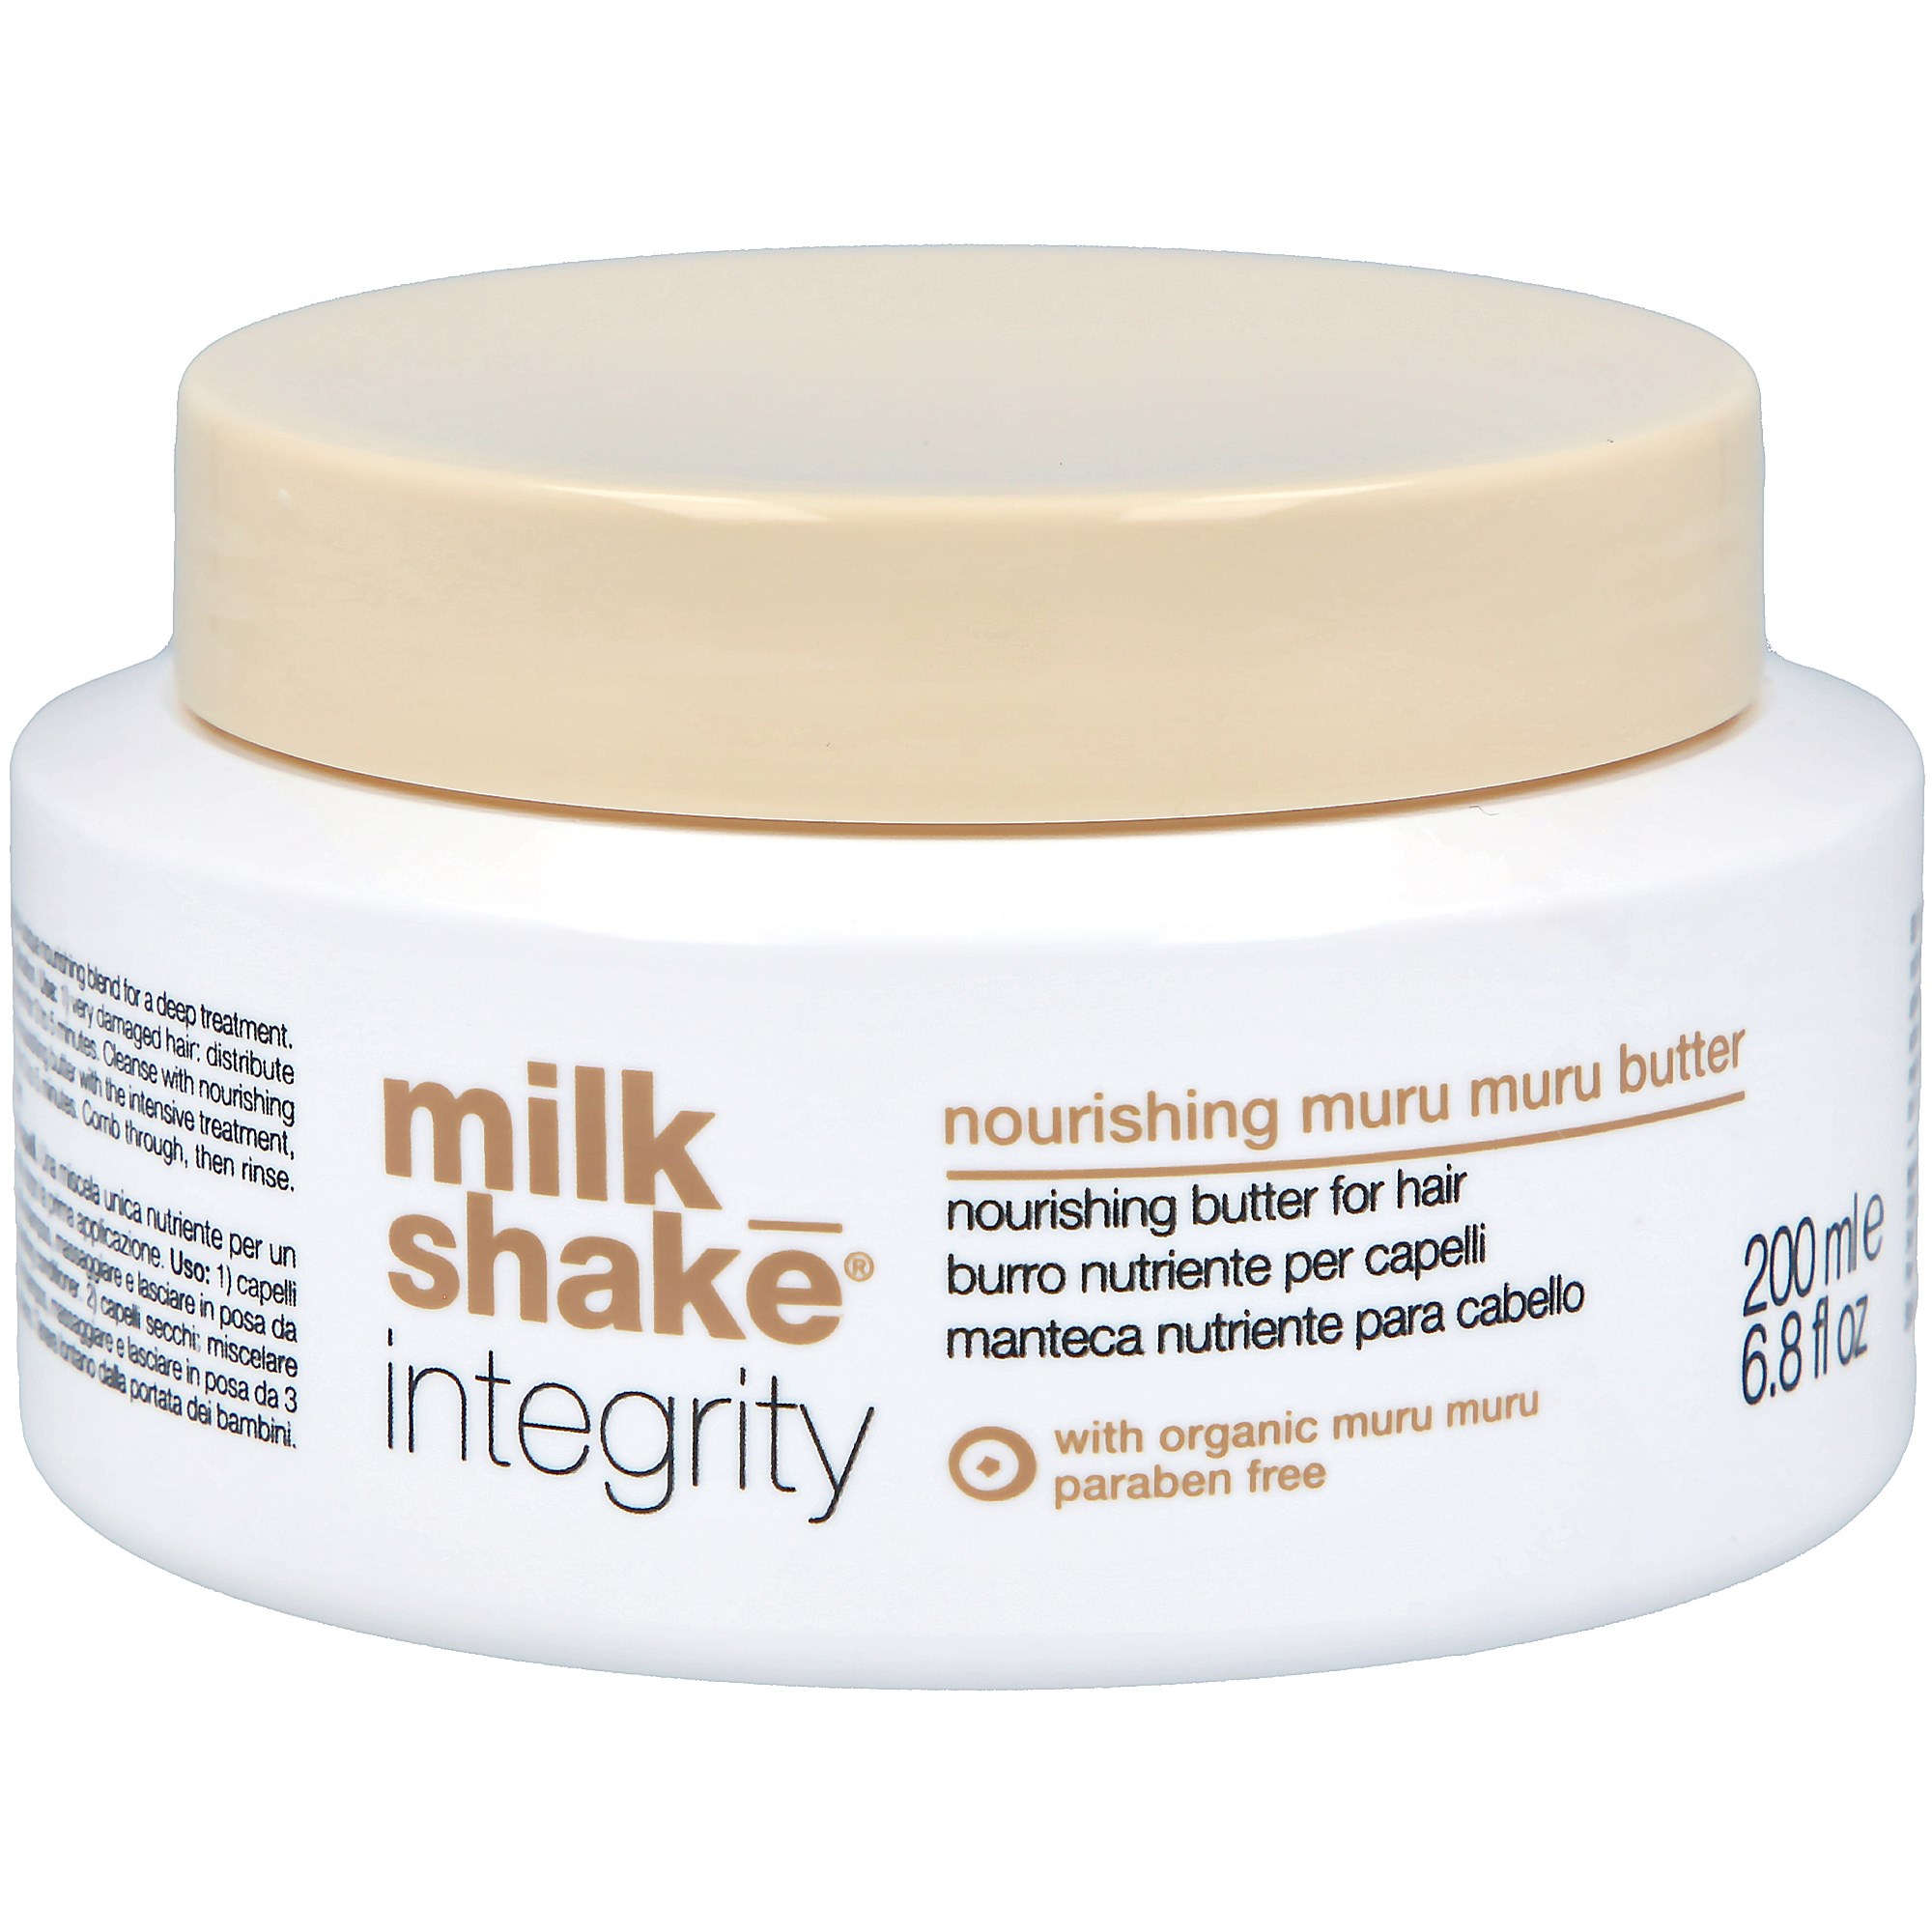 Läs mer om milk_shake Integrity Nourishing Muru Muru Butter